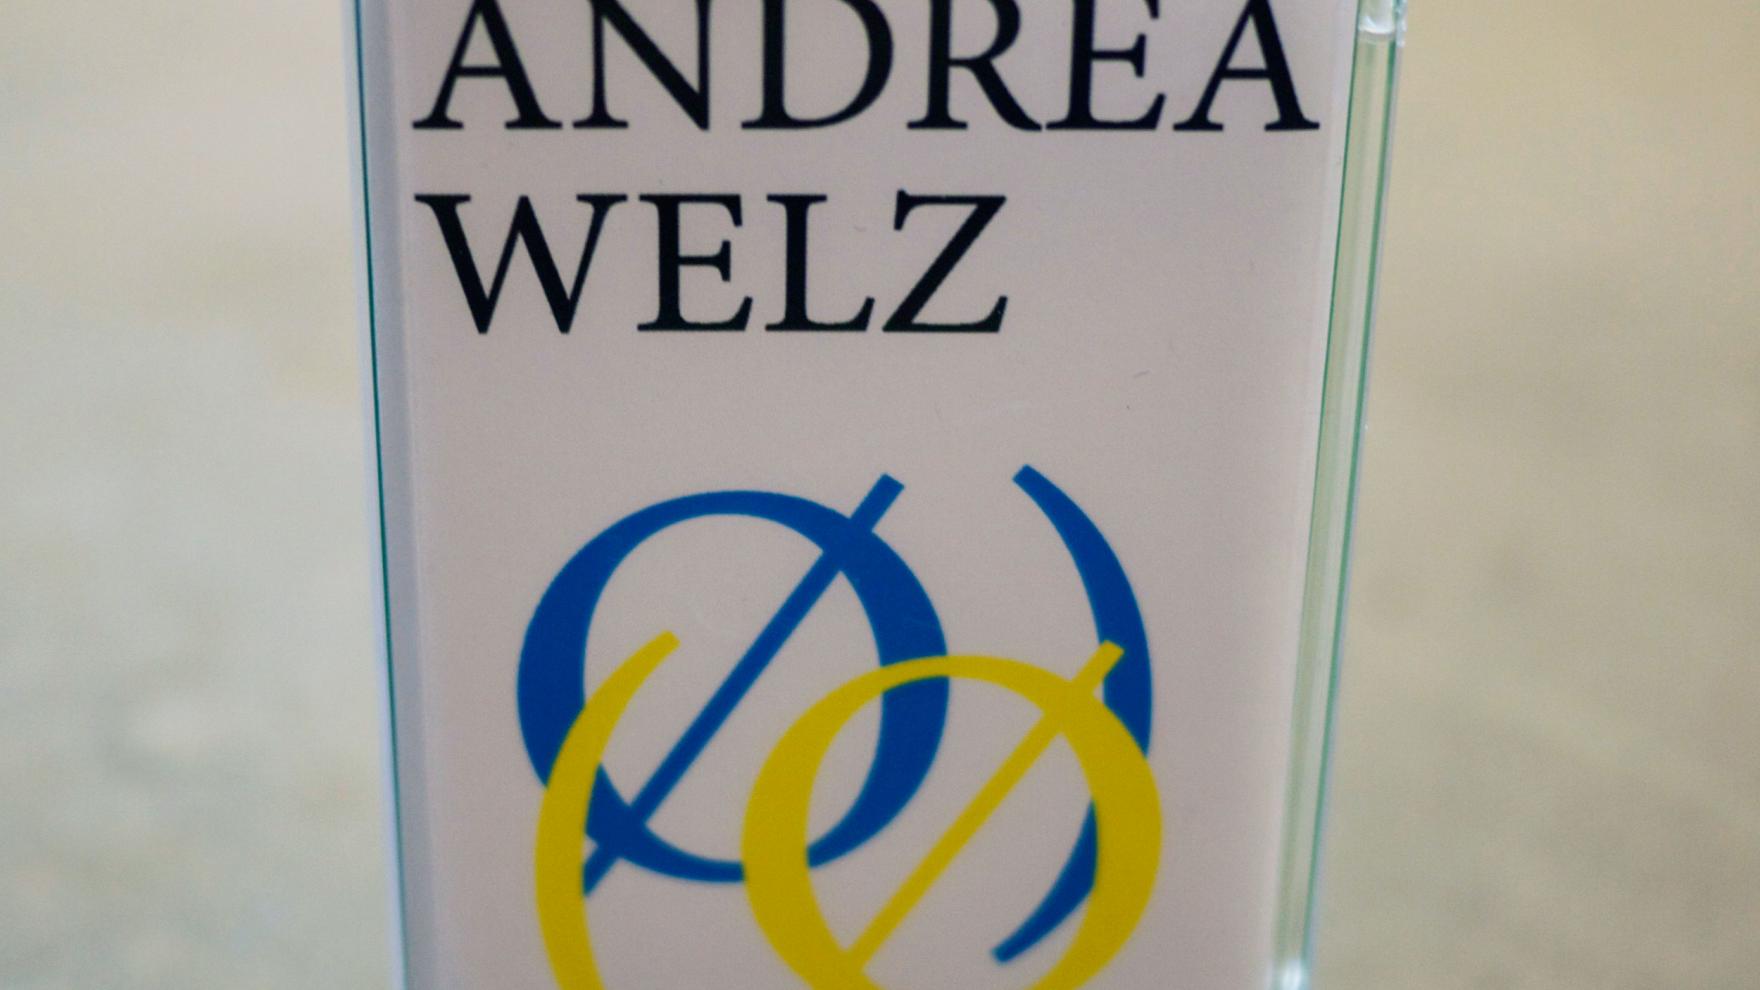 Andrea Welz by Kristoffer Rom